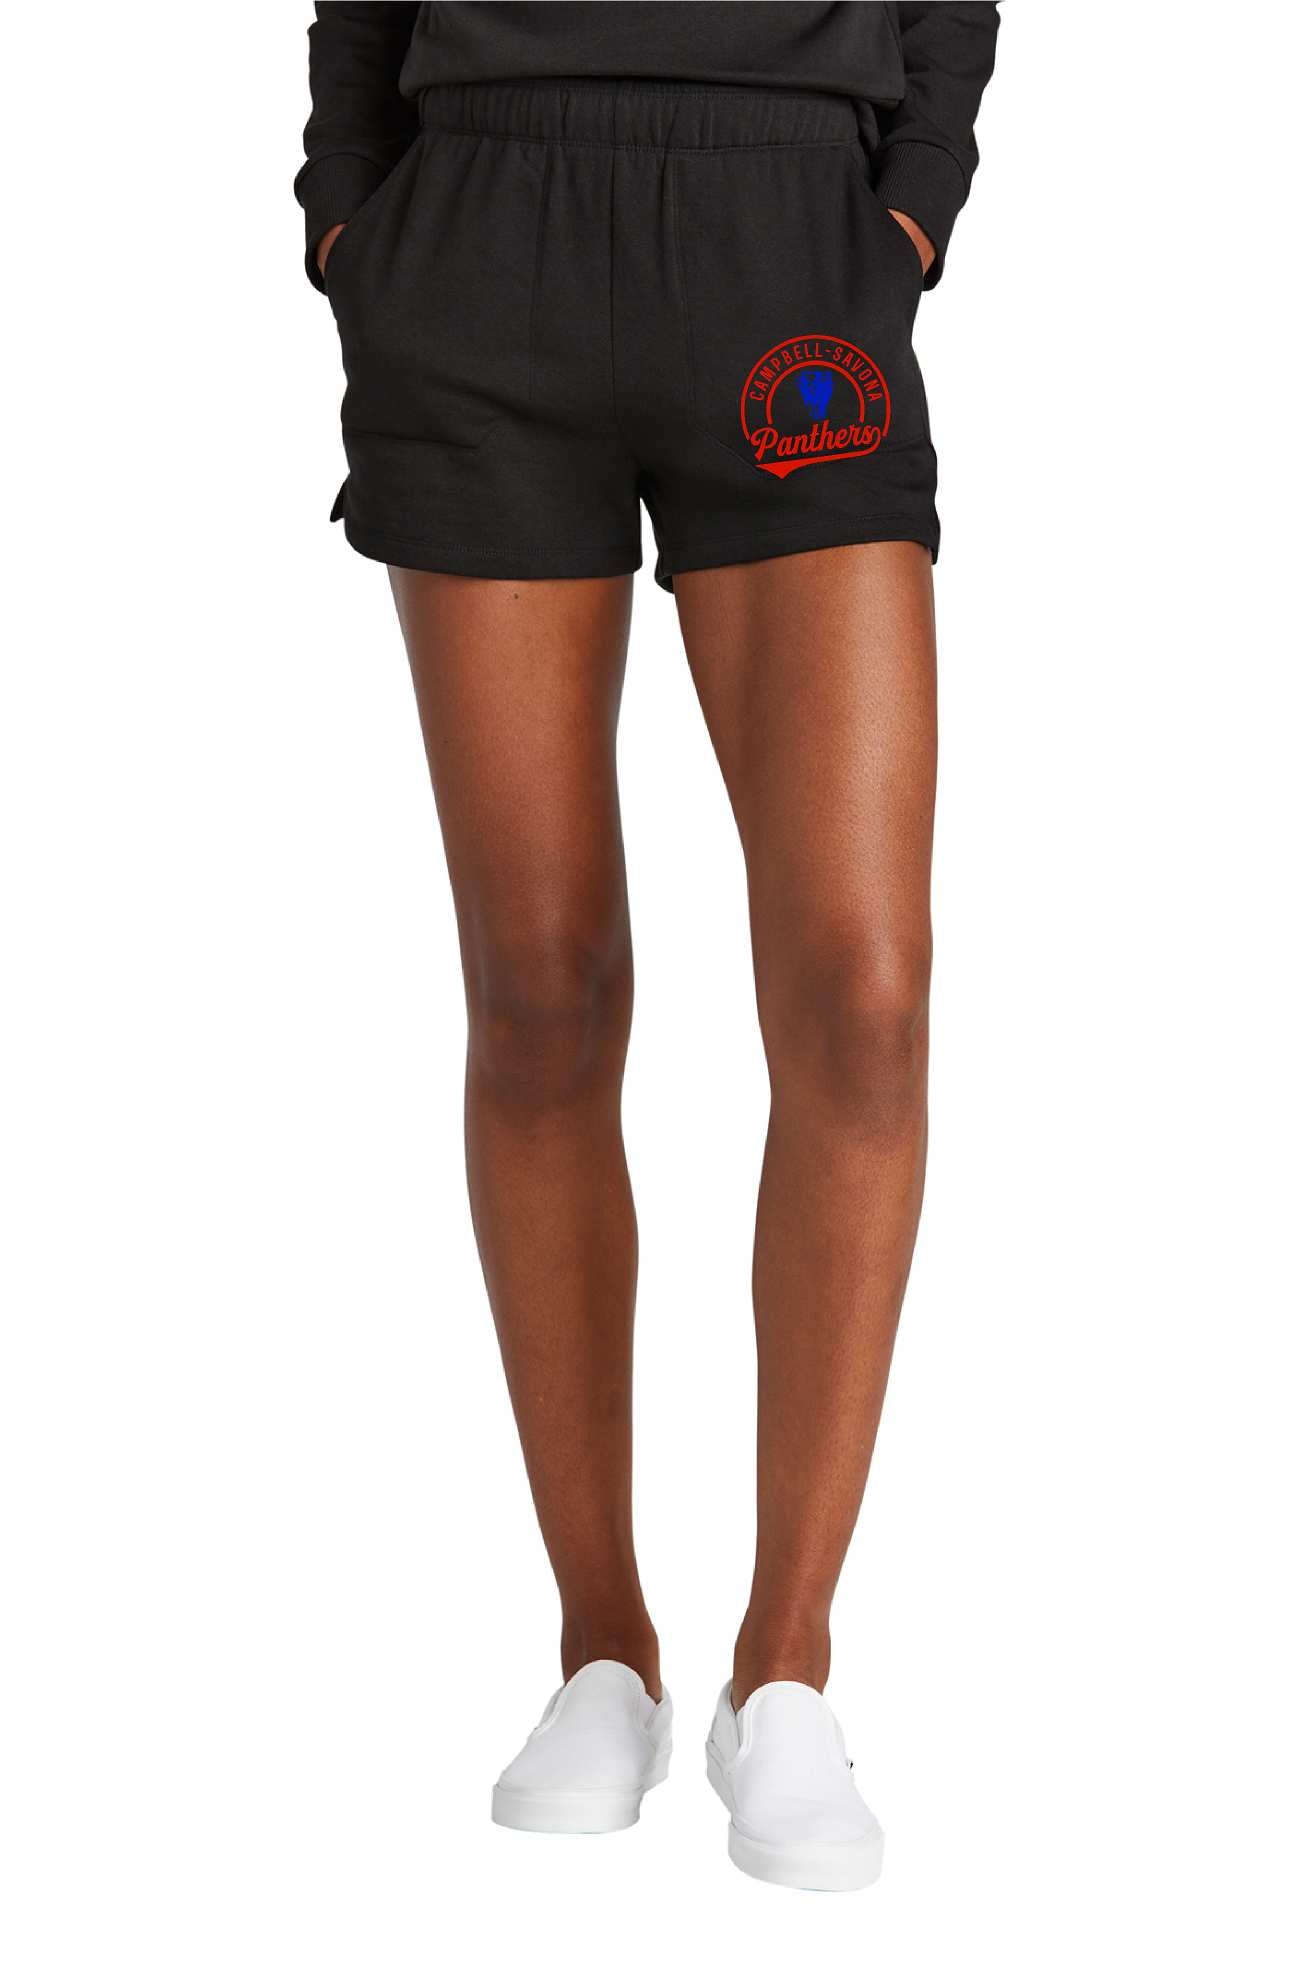 Campbell-Savona Ladies District Fleece shorts DT1309